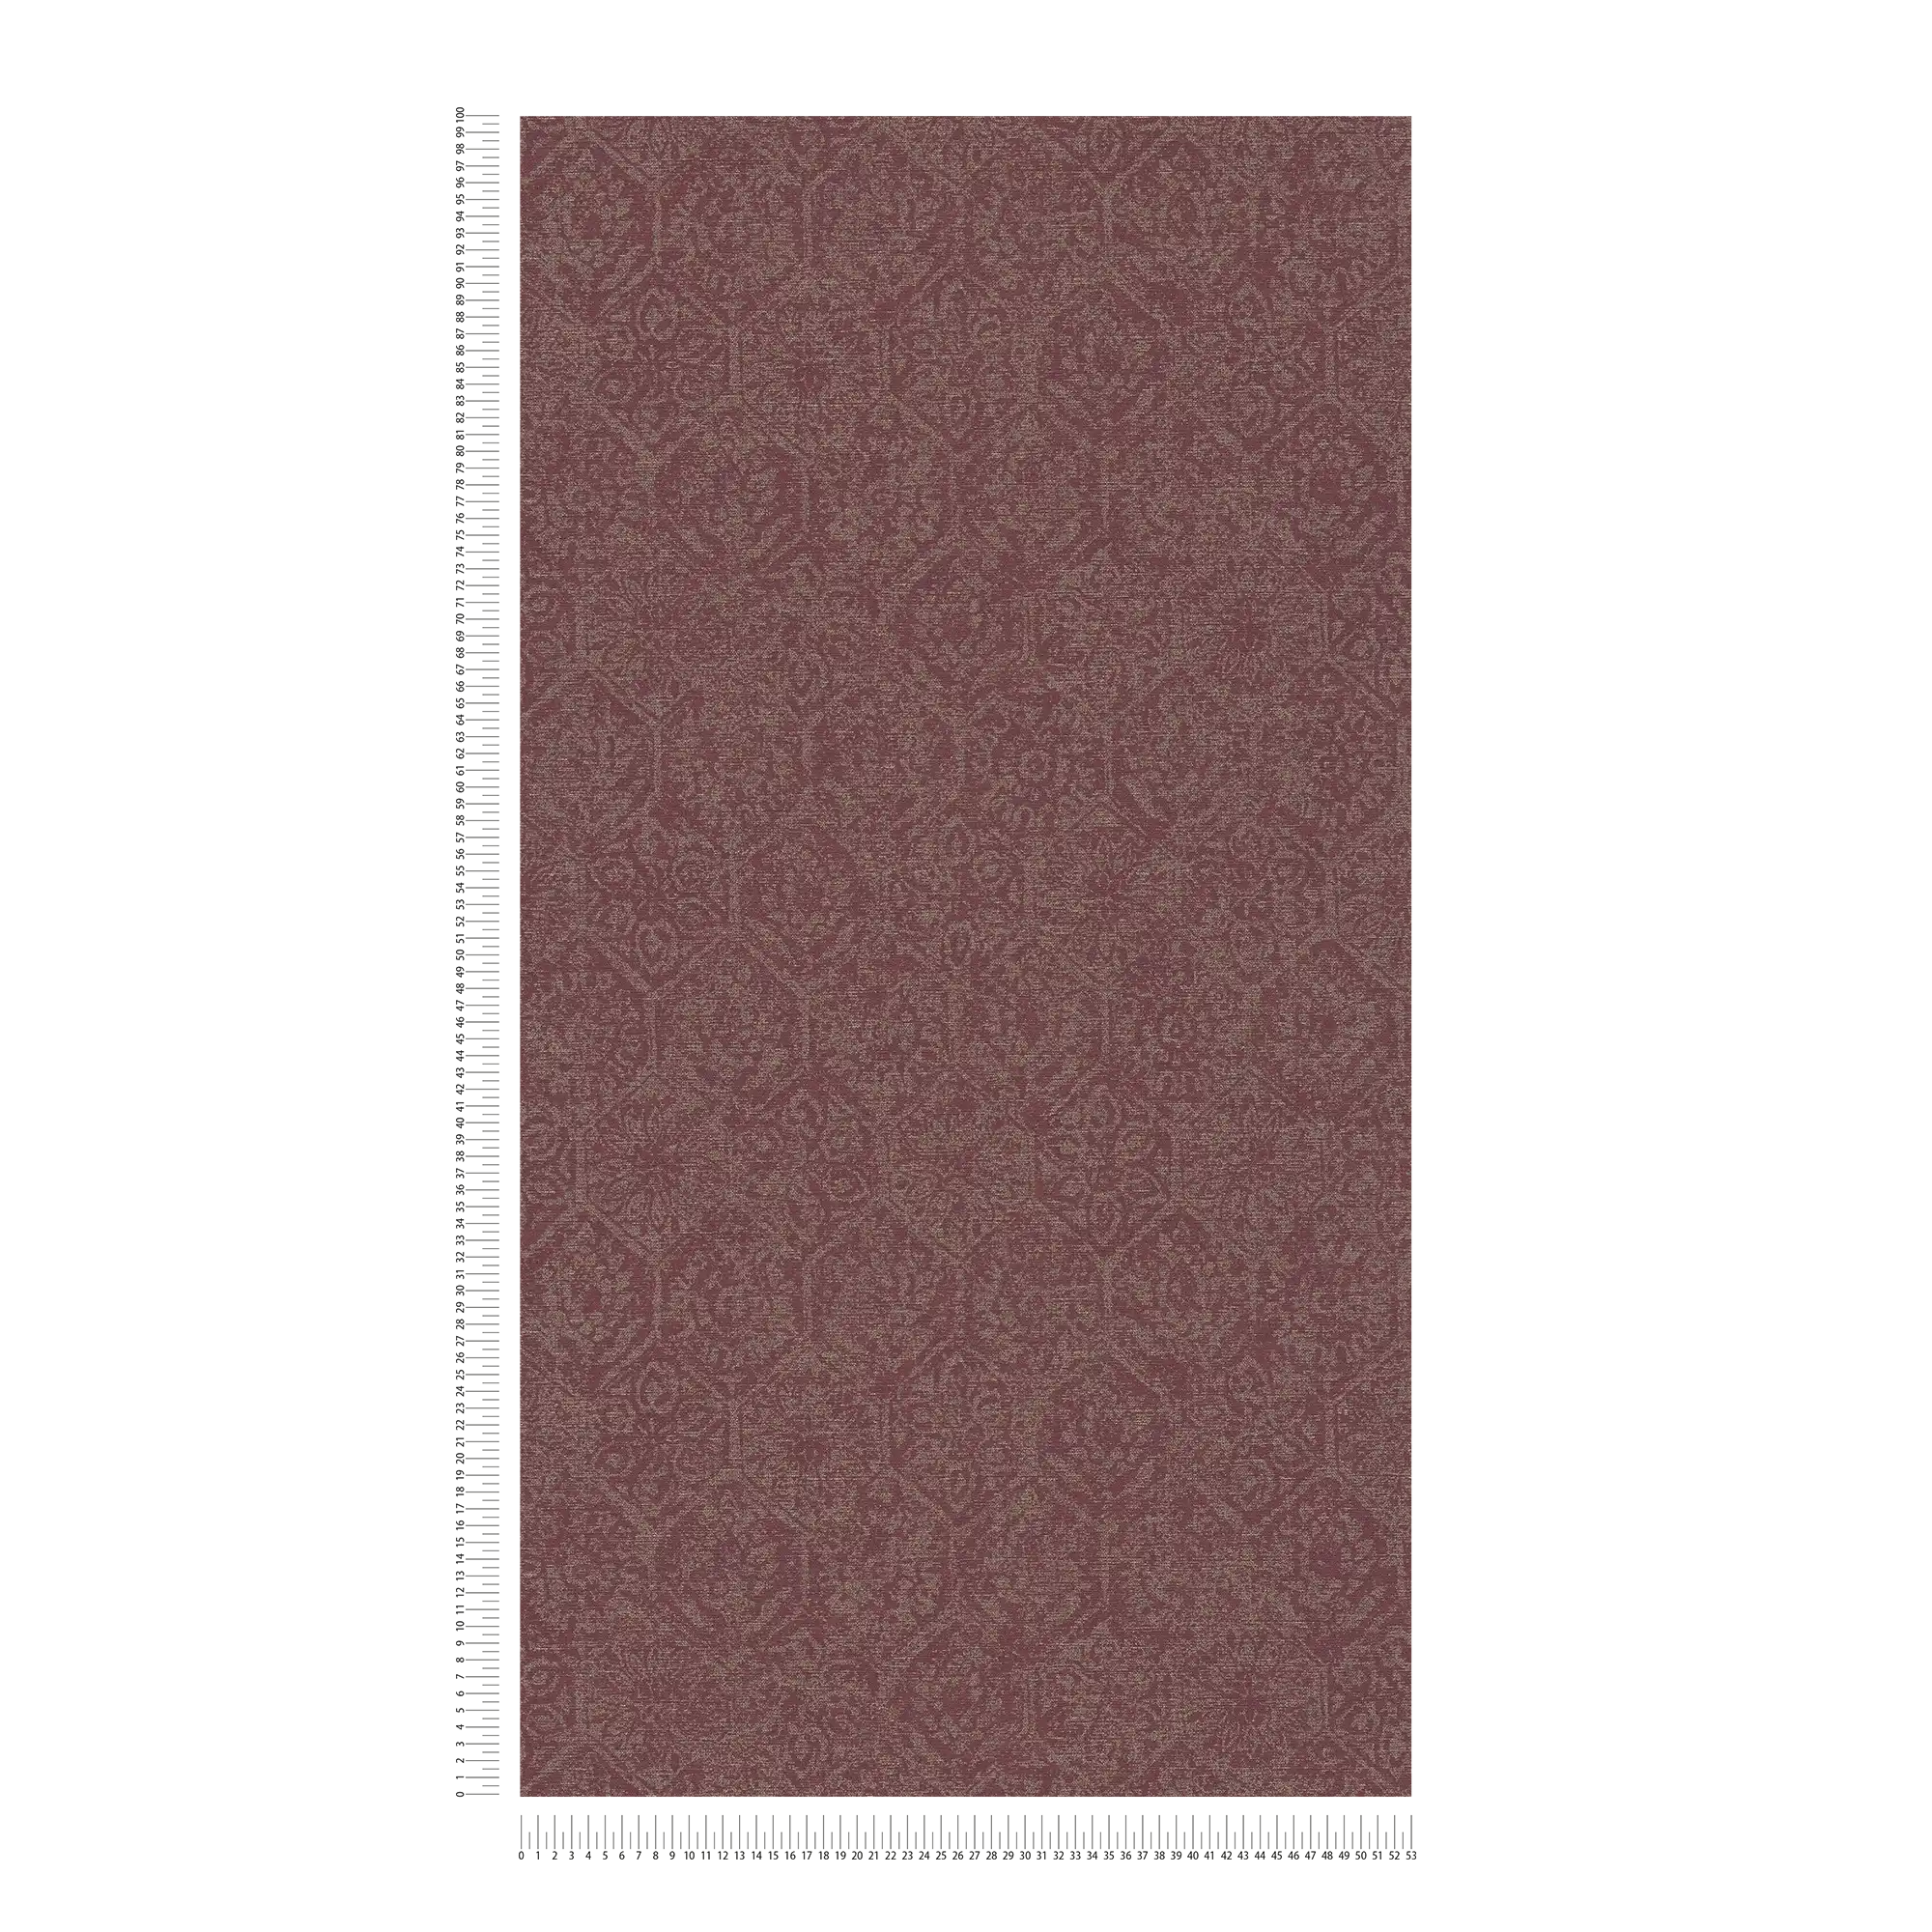             papel pintado patrón de oro en aspecto usado con aspecto de lino - metálico, rojo
        